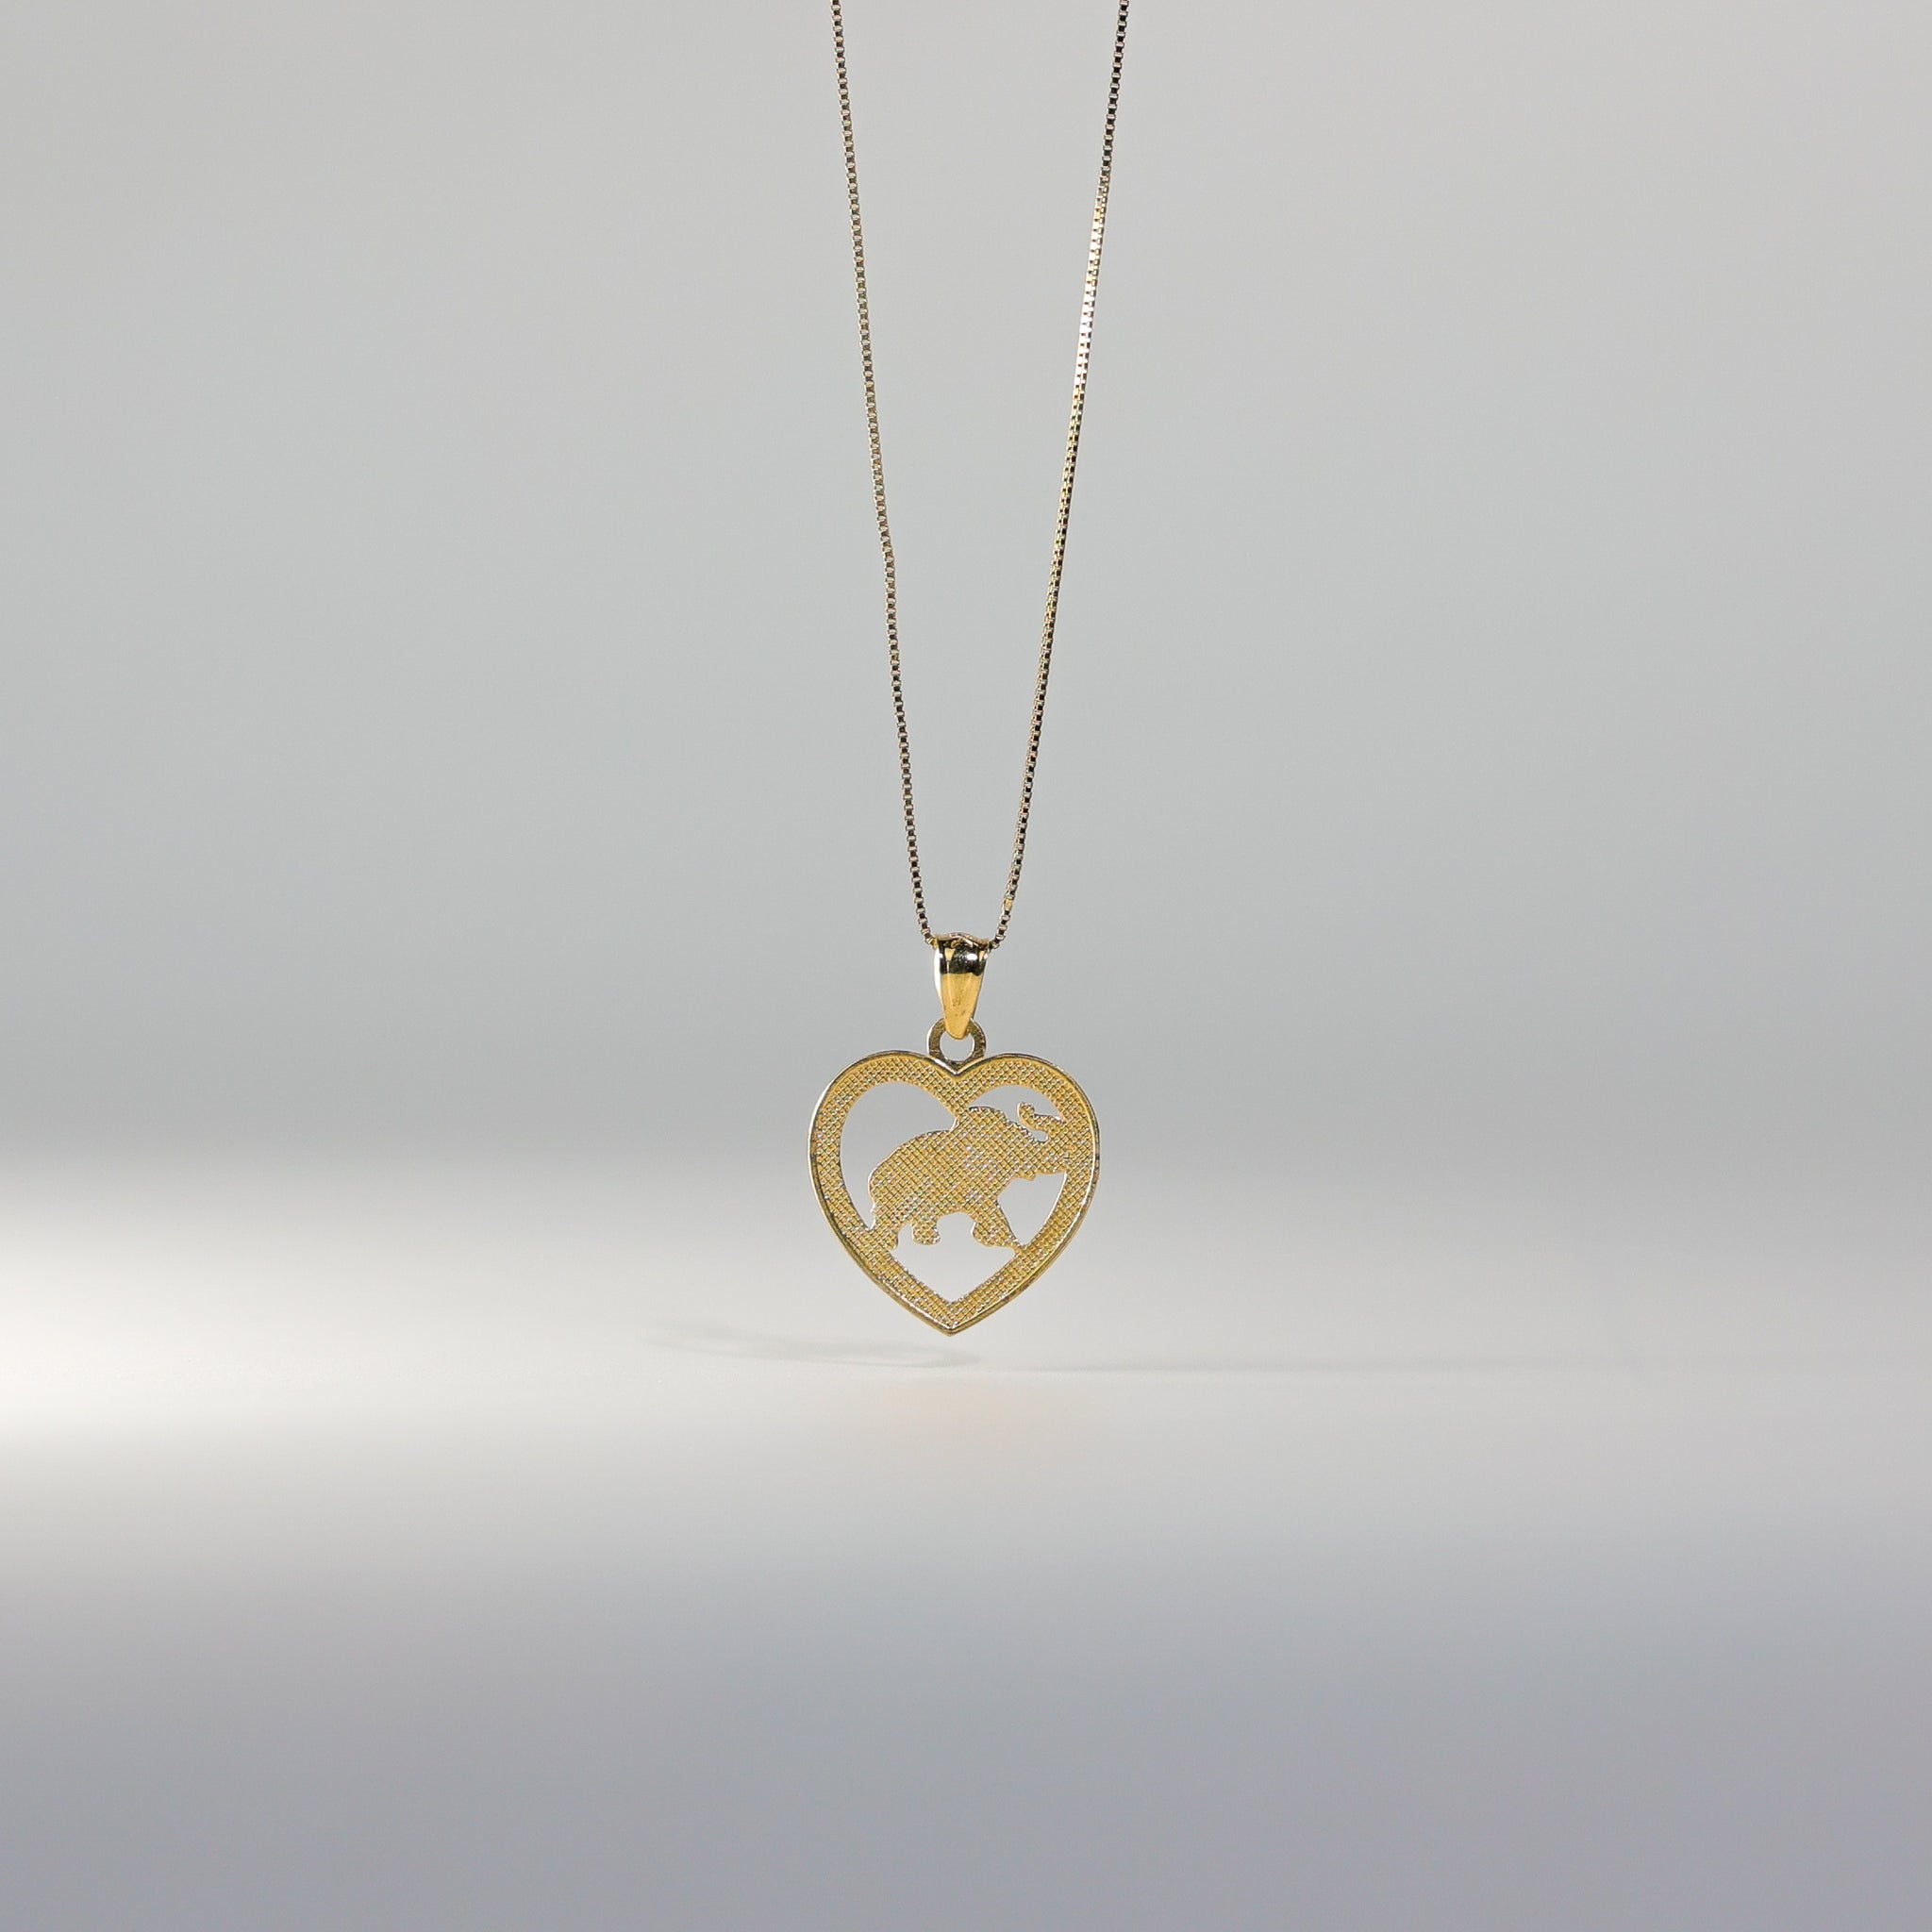 Gold Elephant Heart Pendant Model-1622 - Charlie & Co. Jewelry